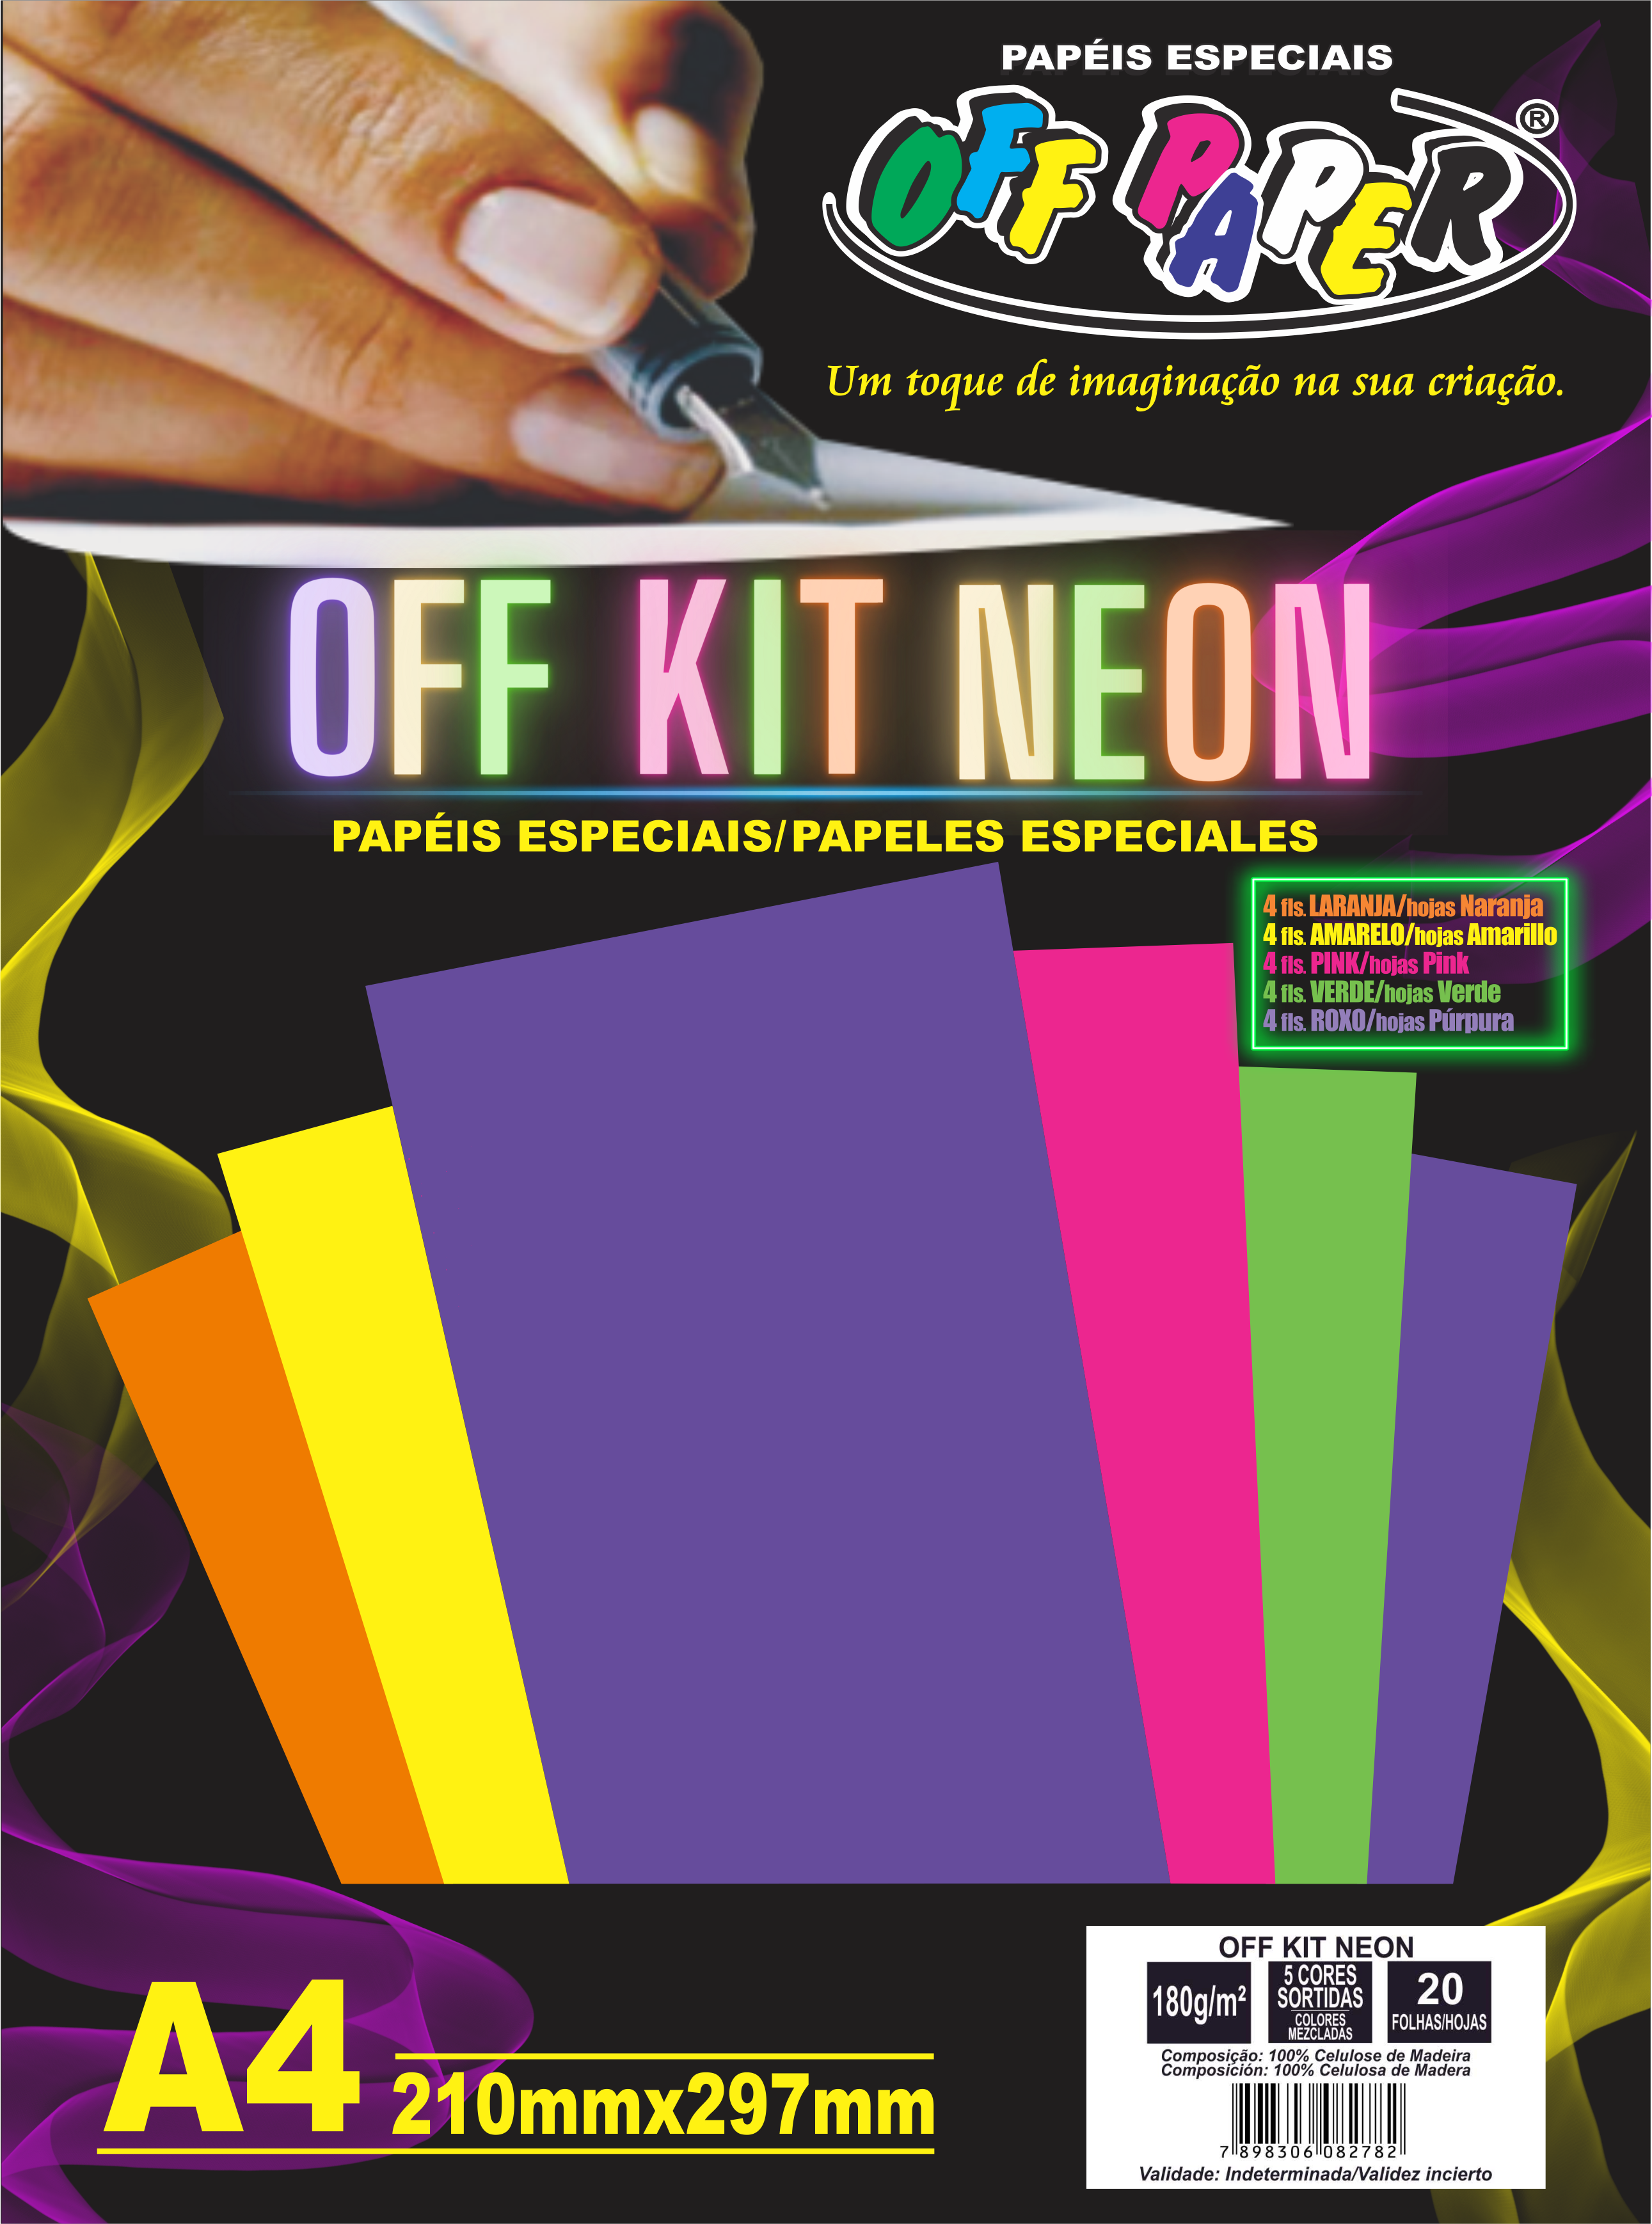 Off Kit Neon 180g/m²